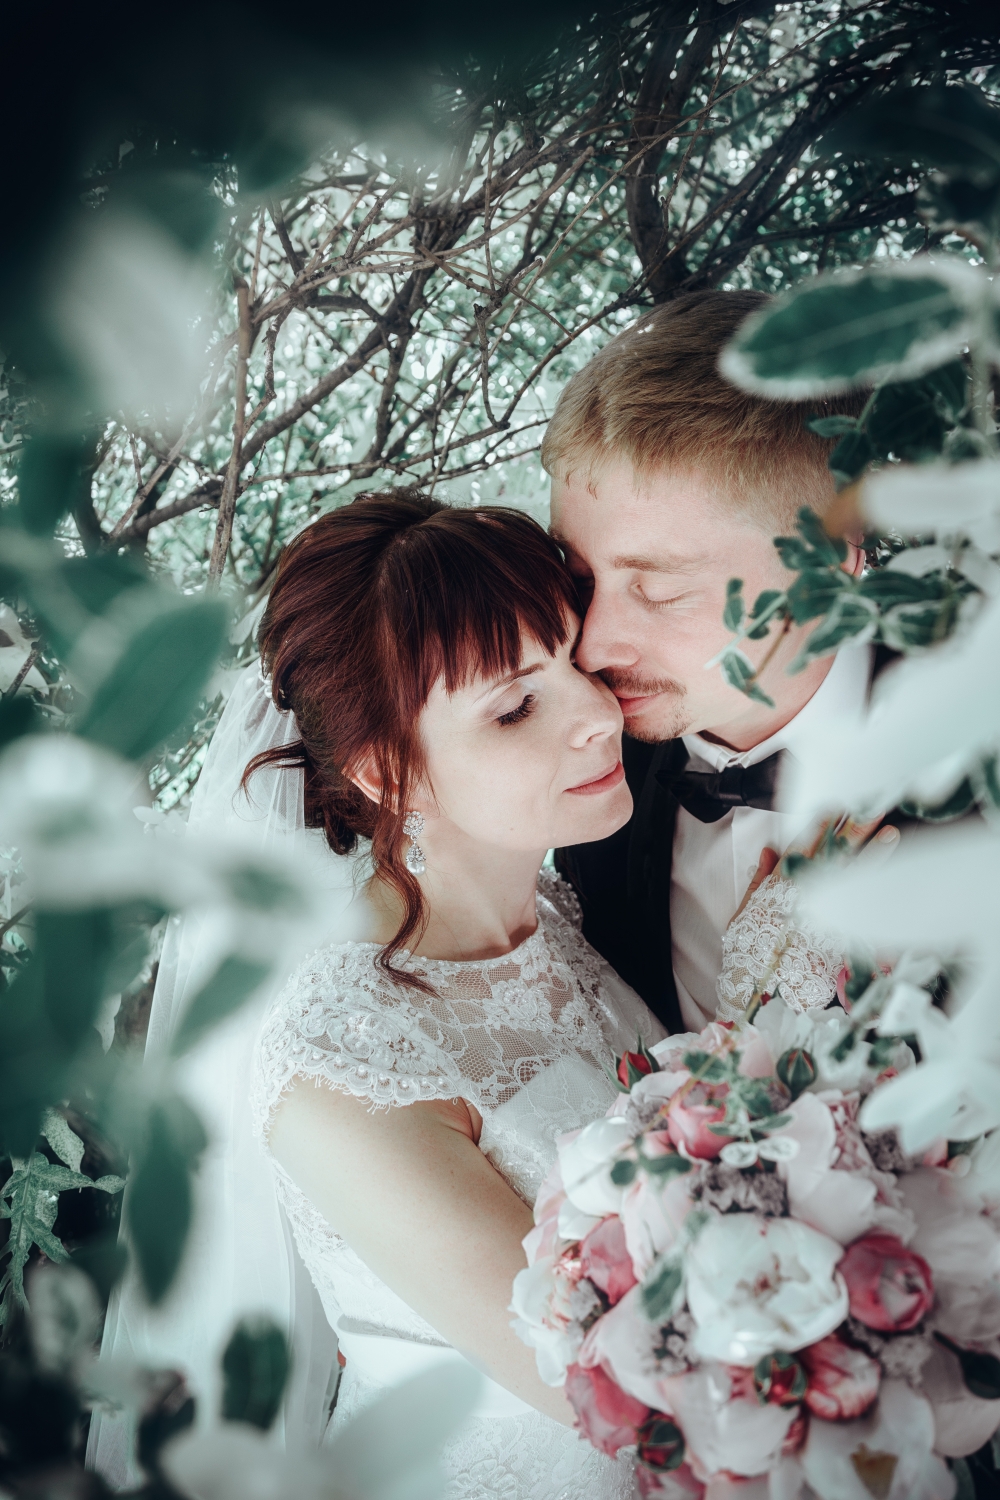 Больше фото здесь
http://vavfoto.ru/wedding